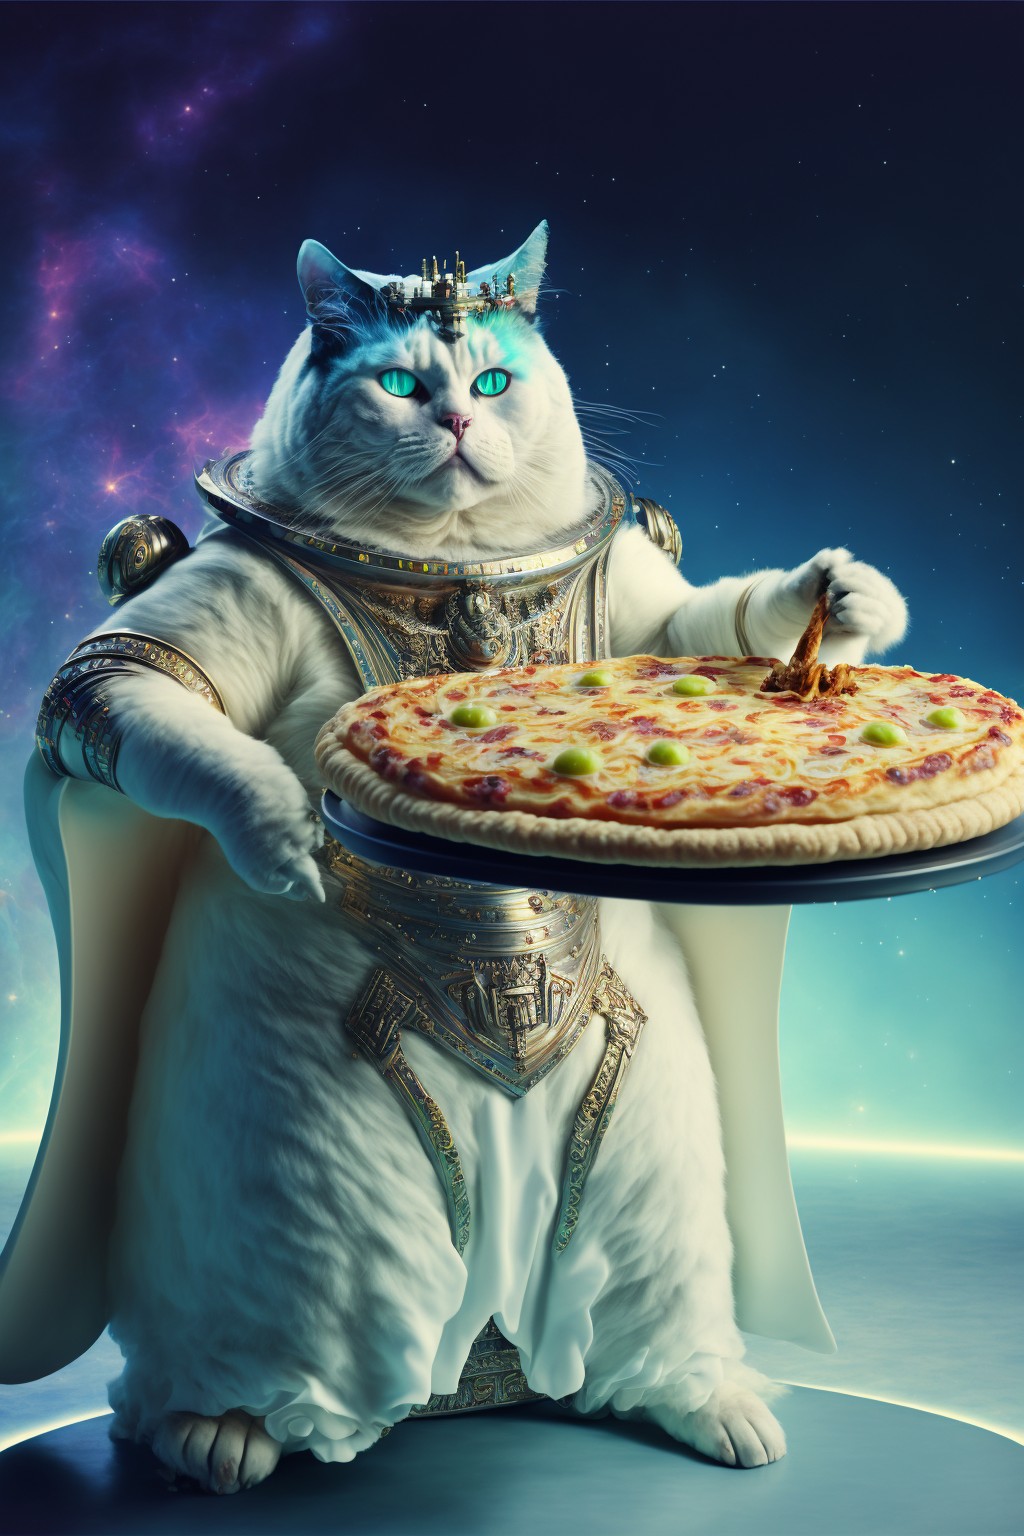 Big fat cat chef is making pizza